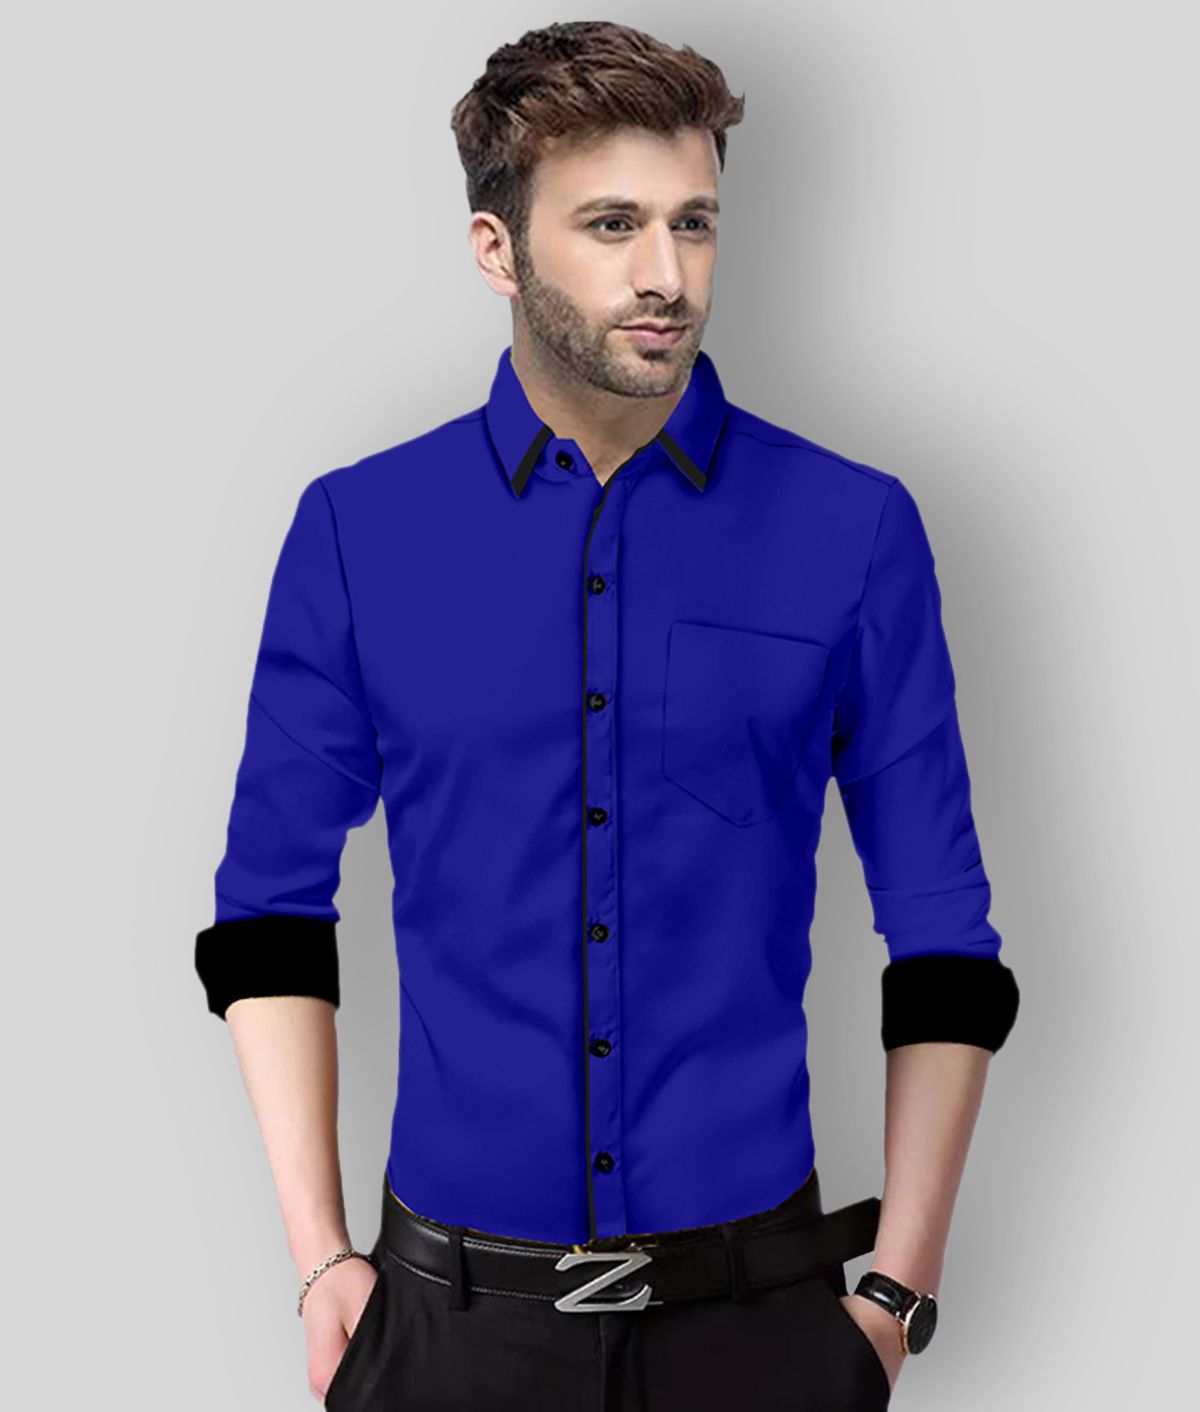 P&V - Blue Cotton Blend Slim Fit Men's Casual Shirt (Pack of 1)